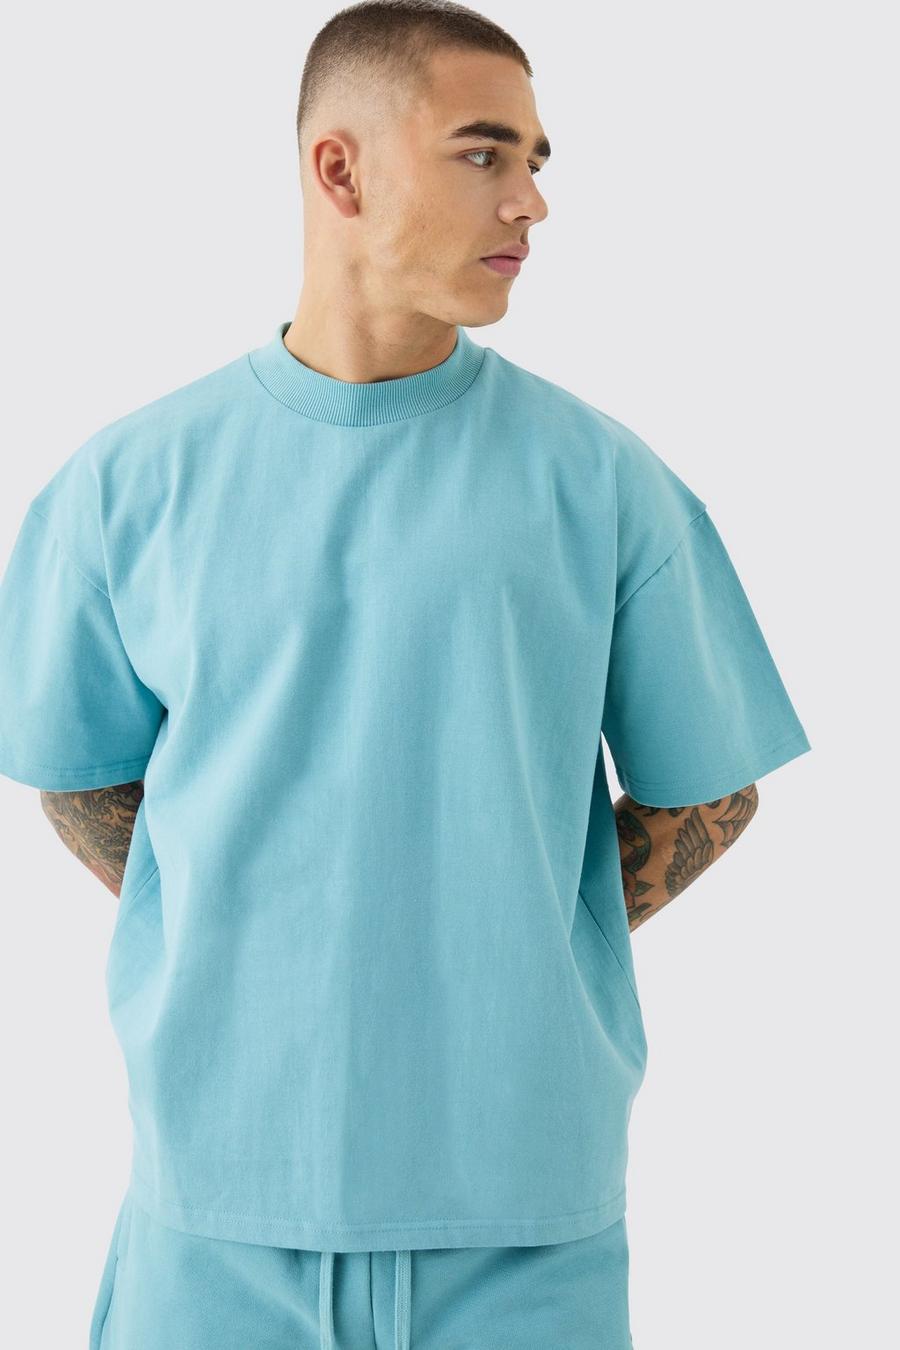 Dusty blue Oversized Extended Neck Super Heavyweight T-shirt